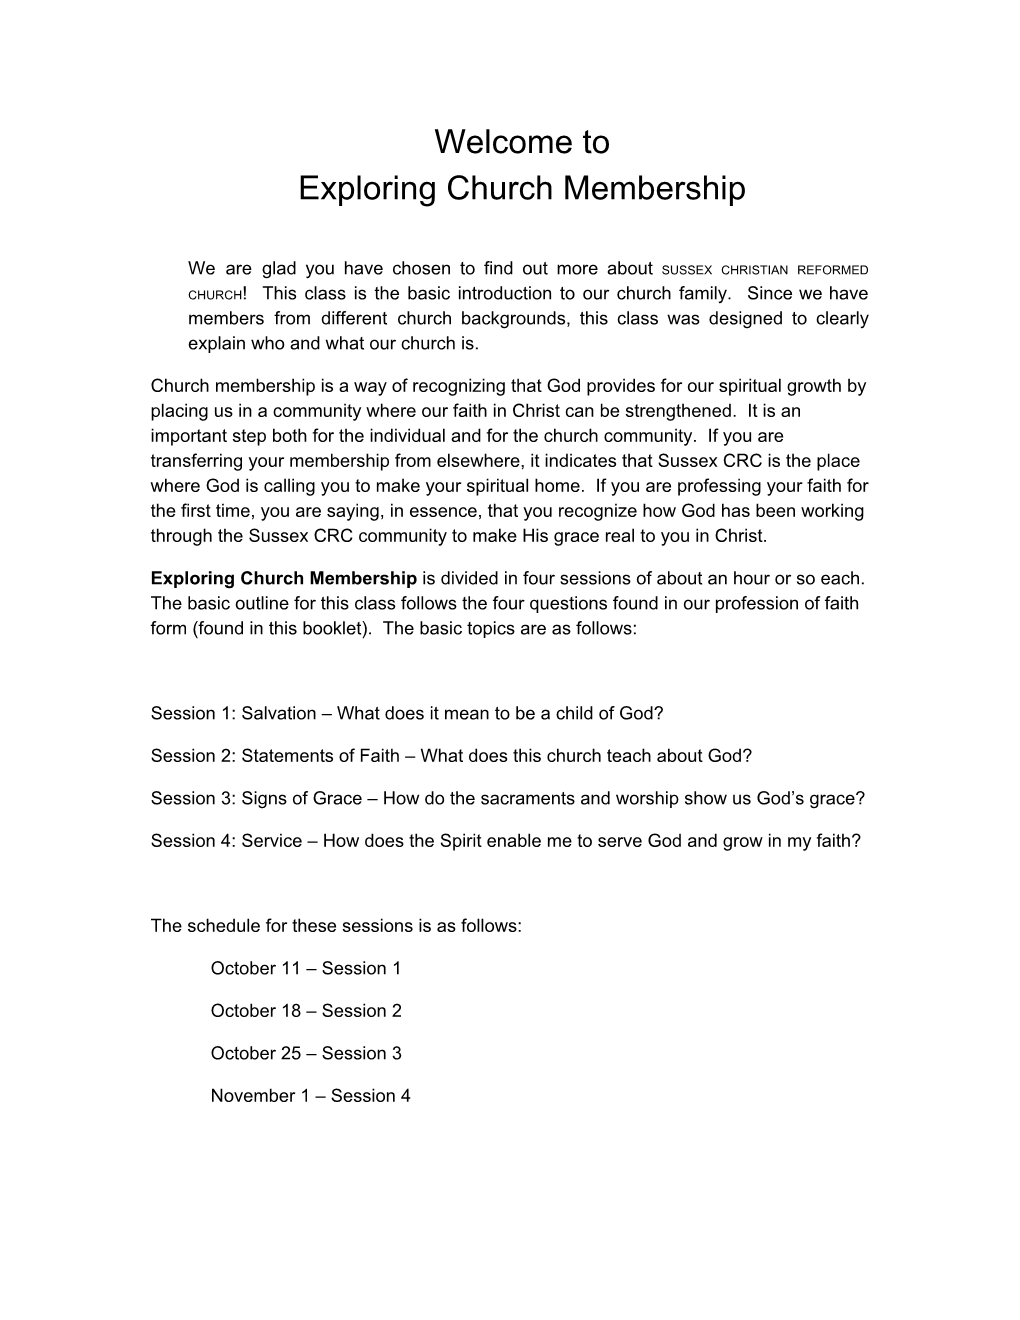 Welcome to Exploring Church Membership